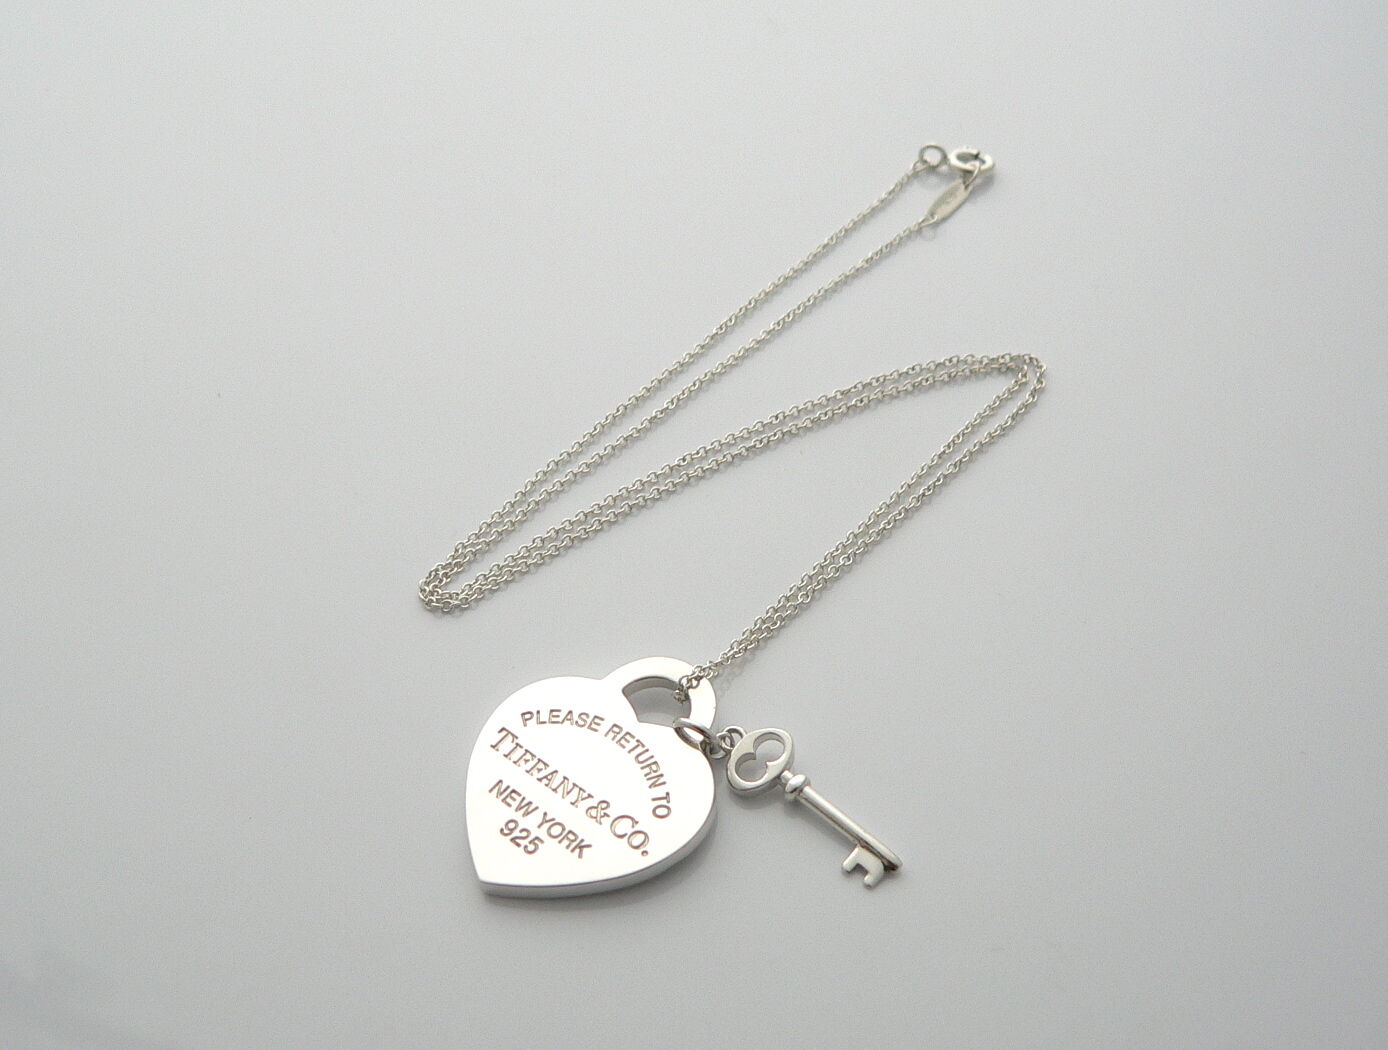 Tiffany Co Silver Diamond Heart Key Necklace Pendant Charm Chain Love Gift